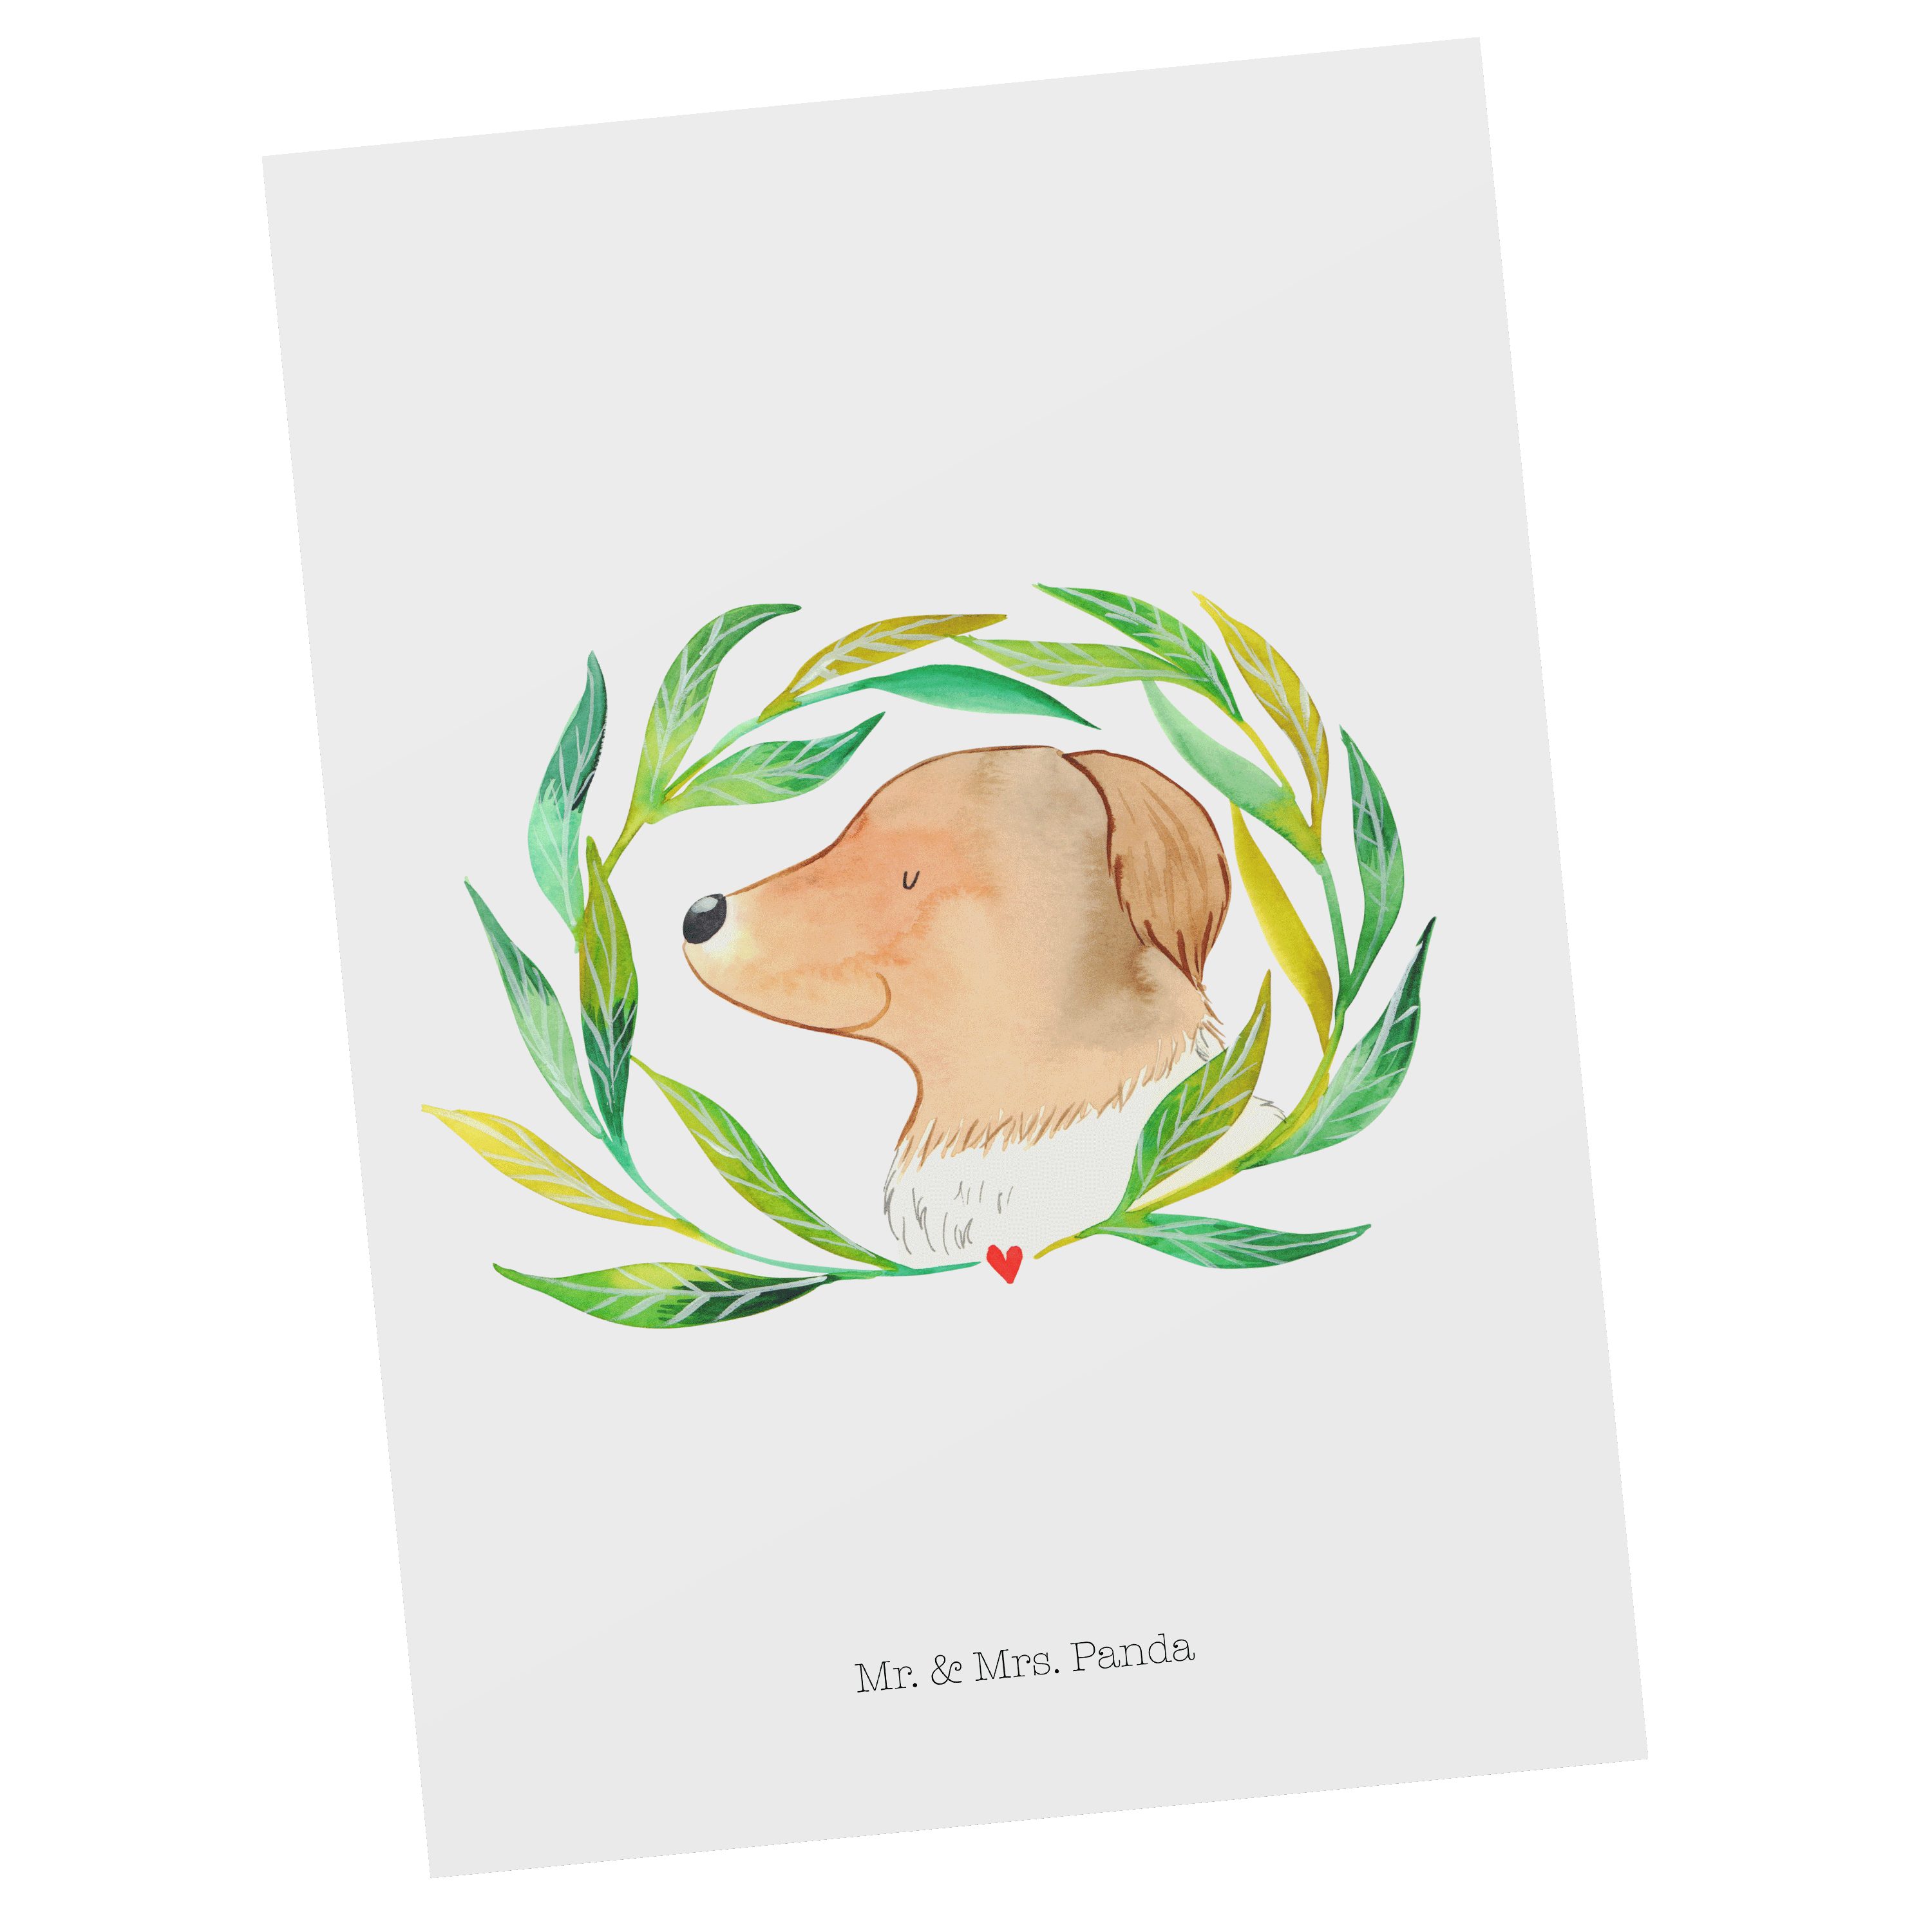 Mr. & Mrs. Panda Postkarte Hund Ranke - Weiß - Geschenk, Grußkarte, Hundemotiv, Karte, Geschenkk